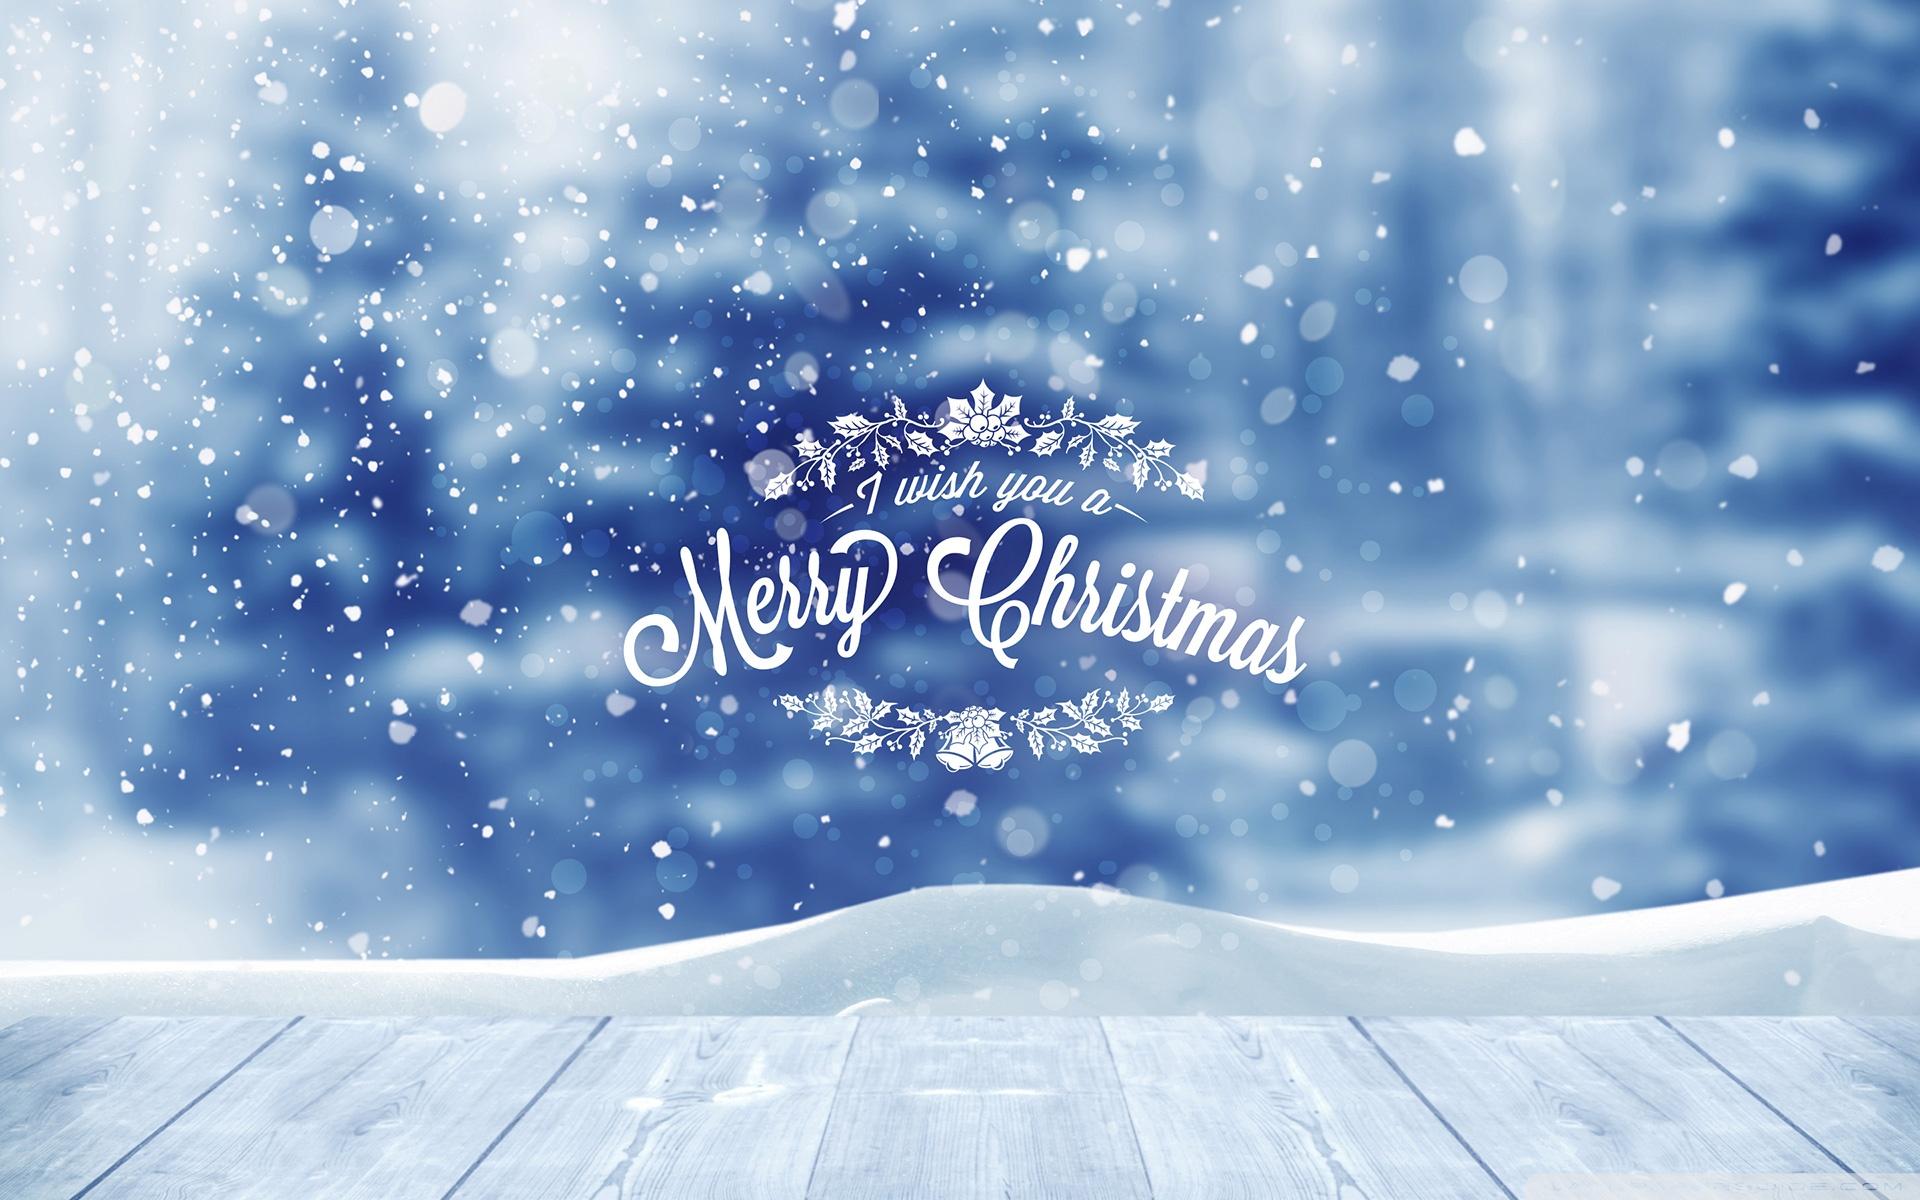 I wish you a Merry Christmas by PimpYourScreen Ultra HD